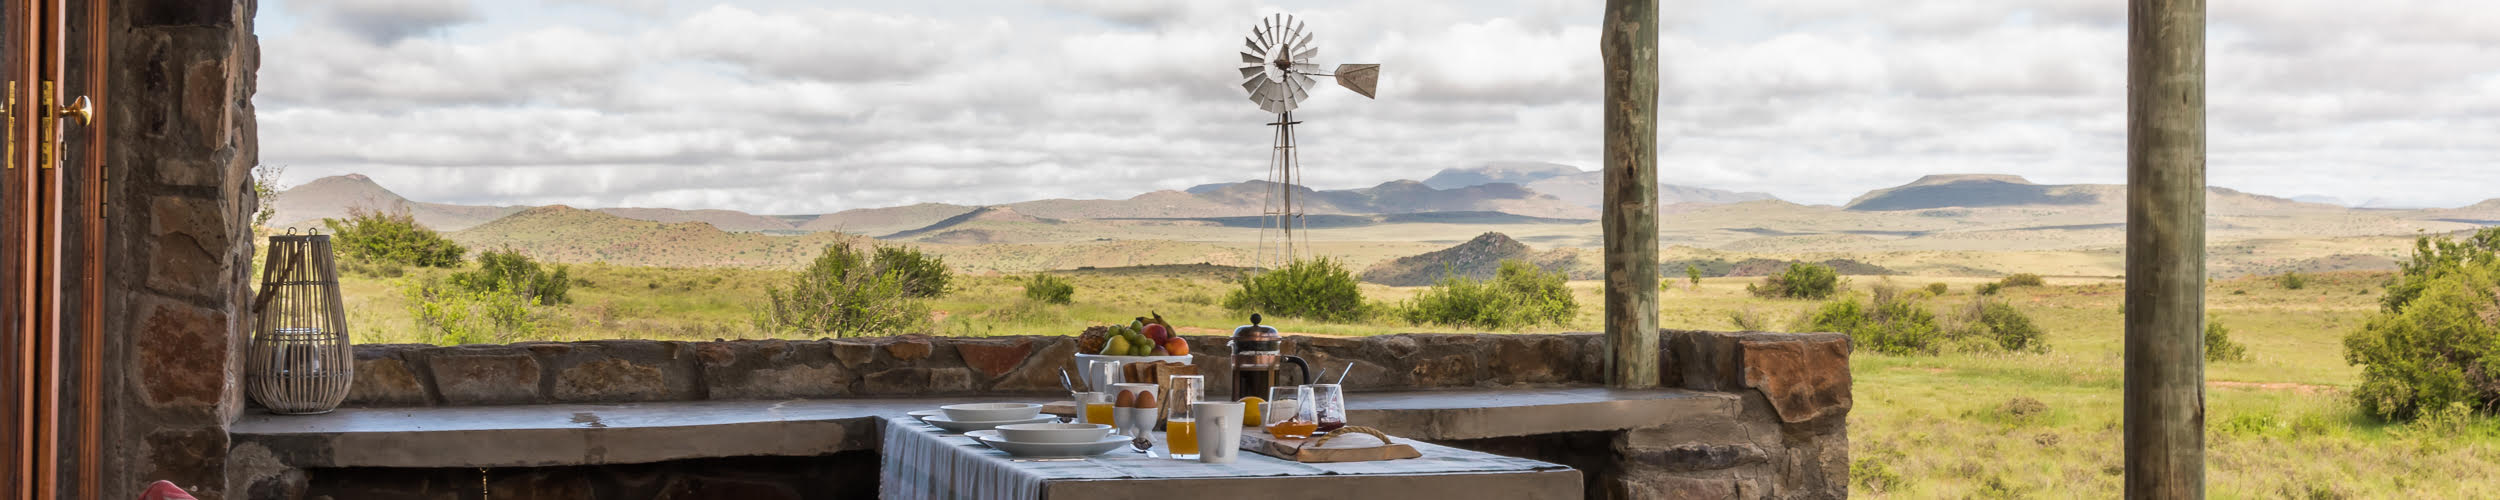 karoo eco lodge breakfast accommodation landscape view